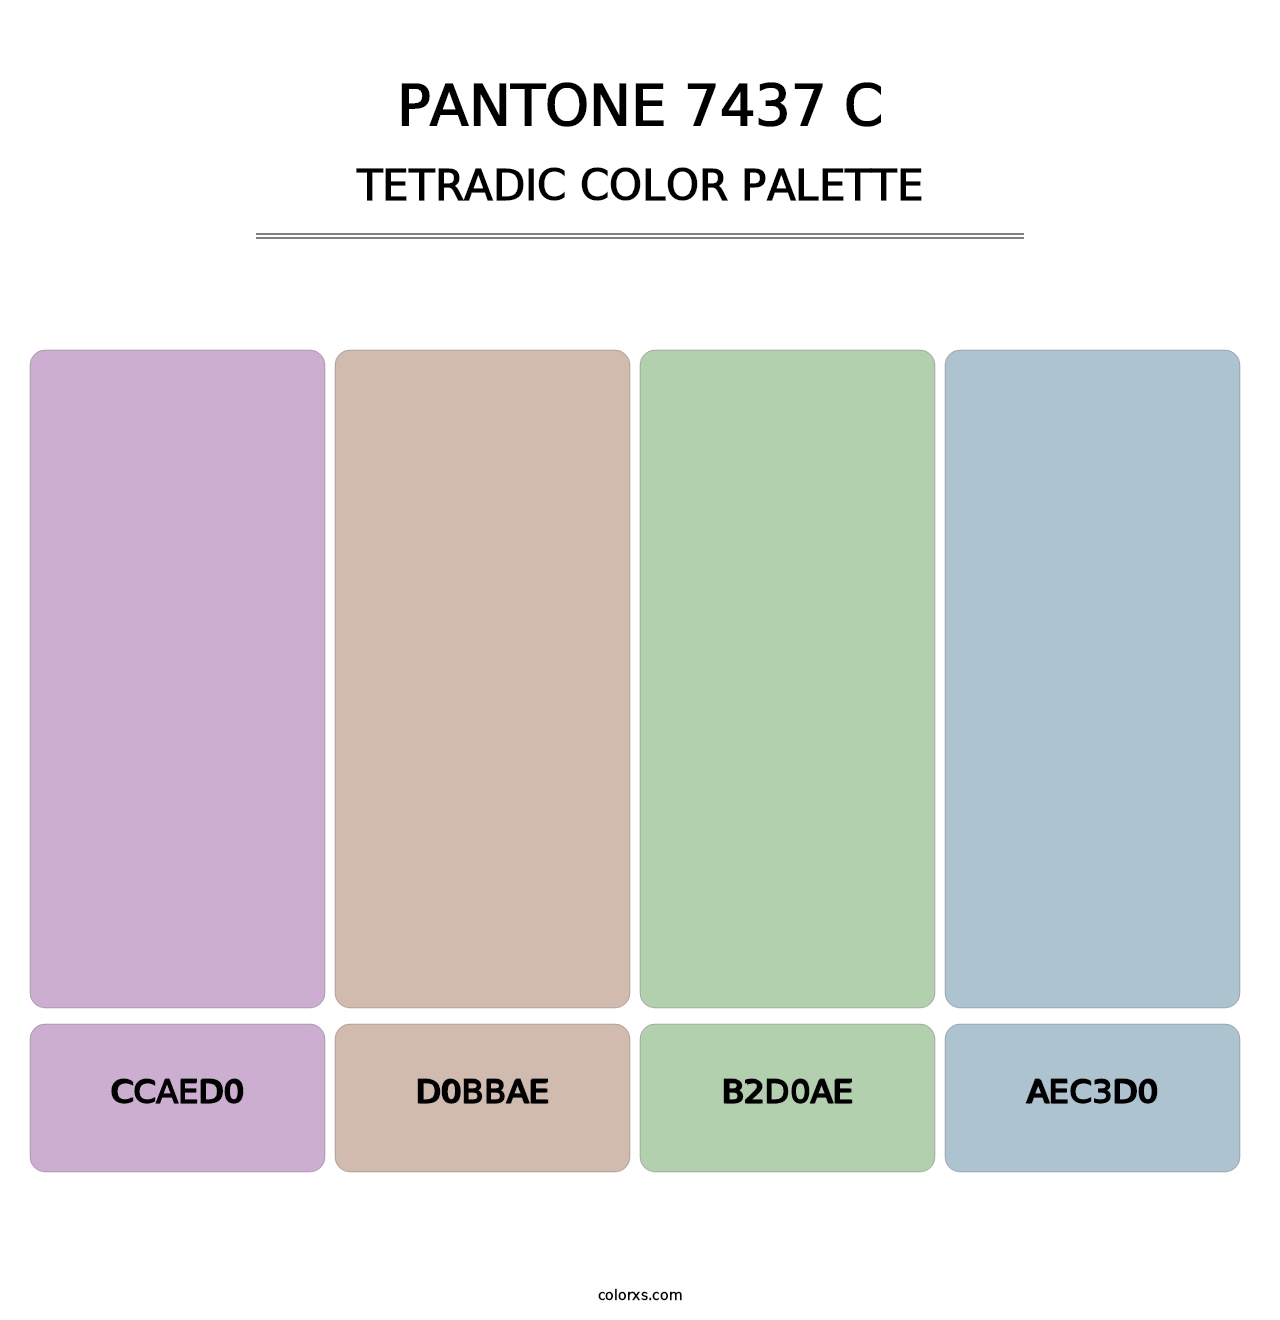 PANTONE 7437 C - Tetradic Color Palette